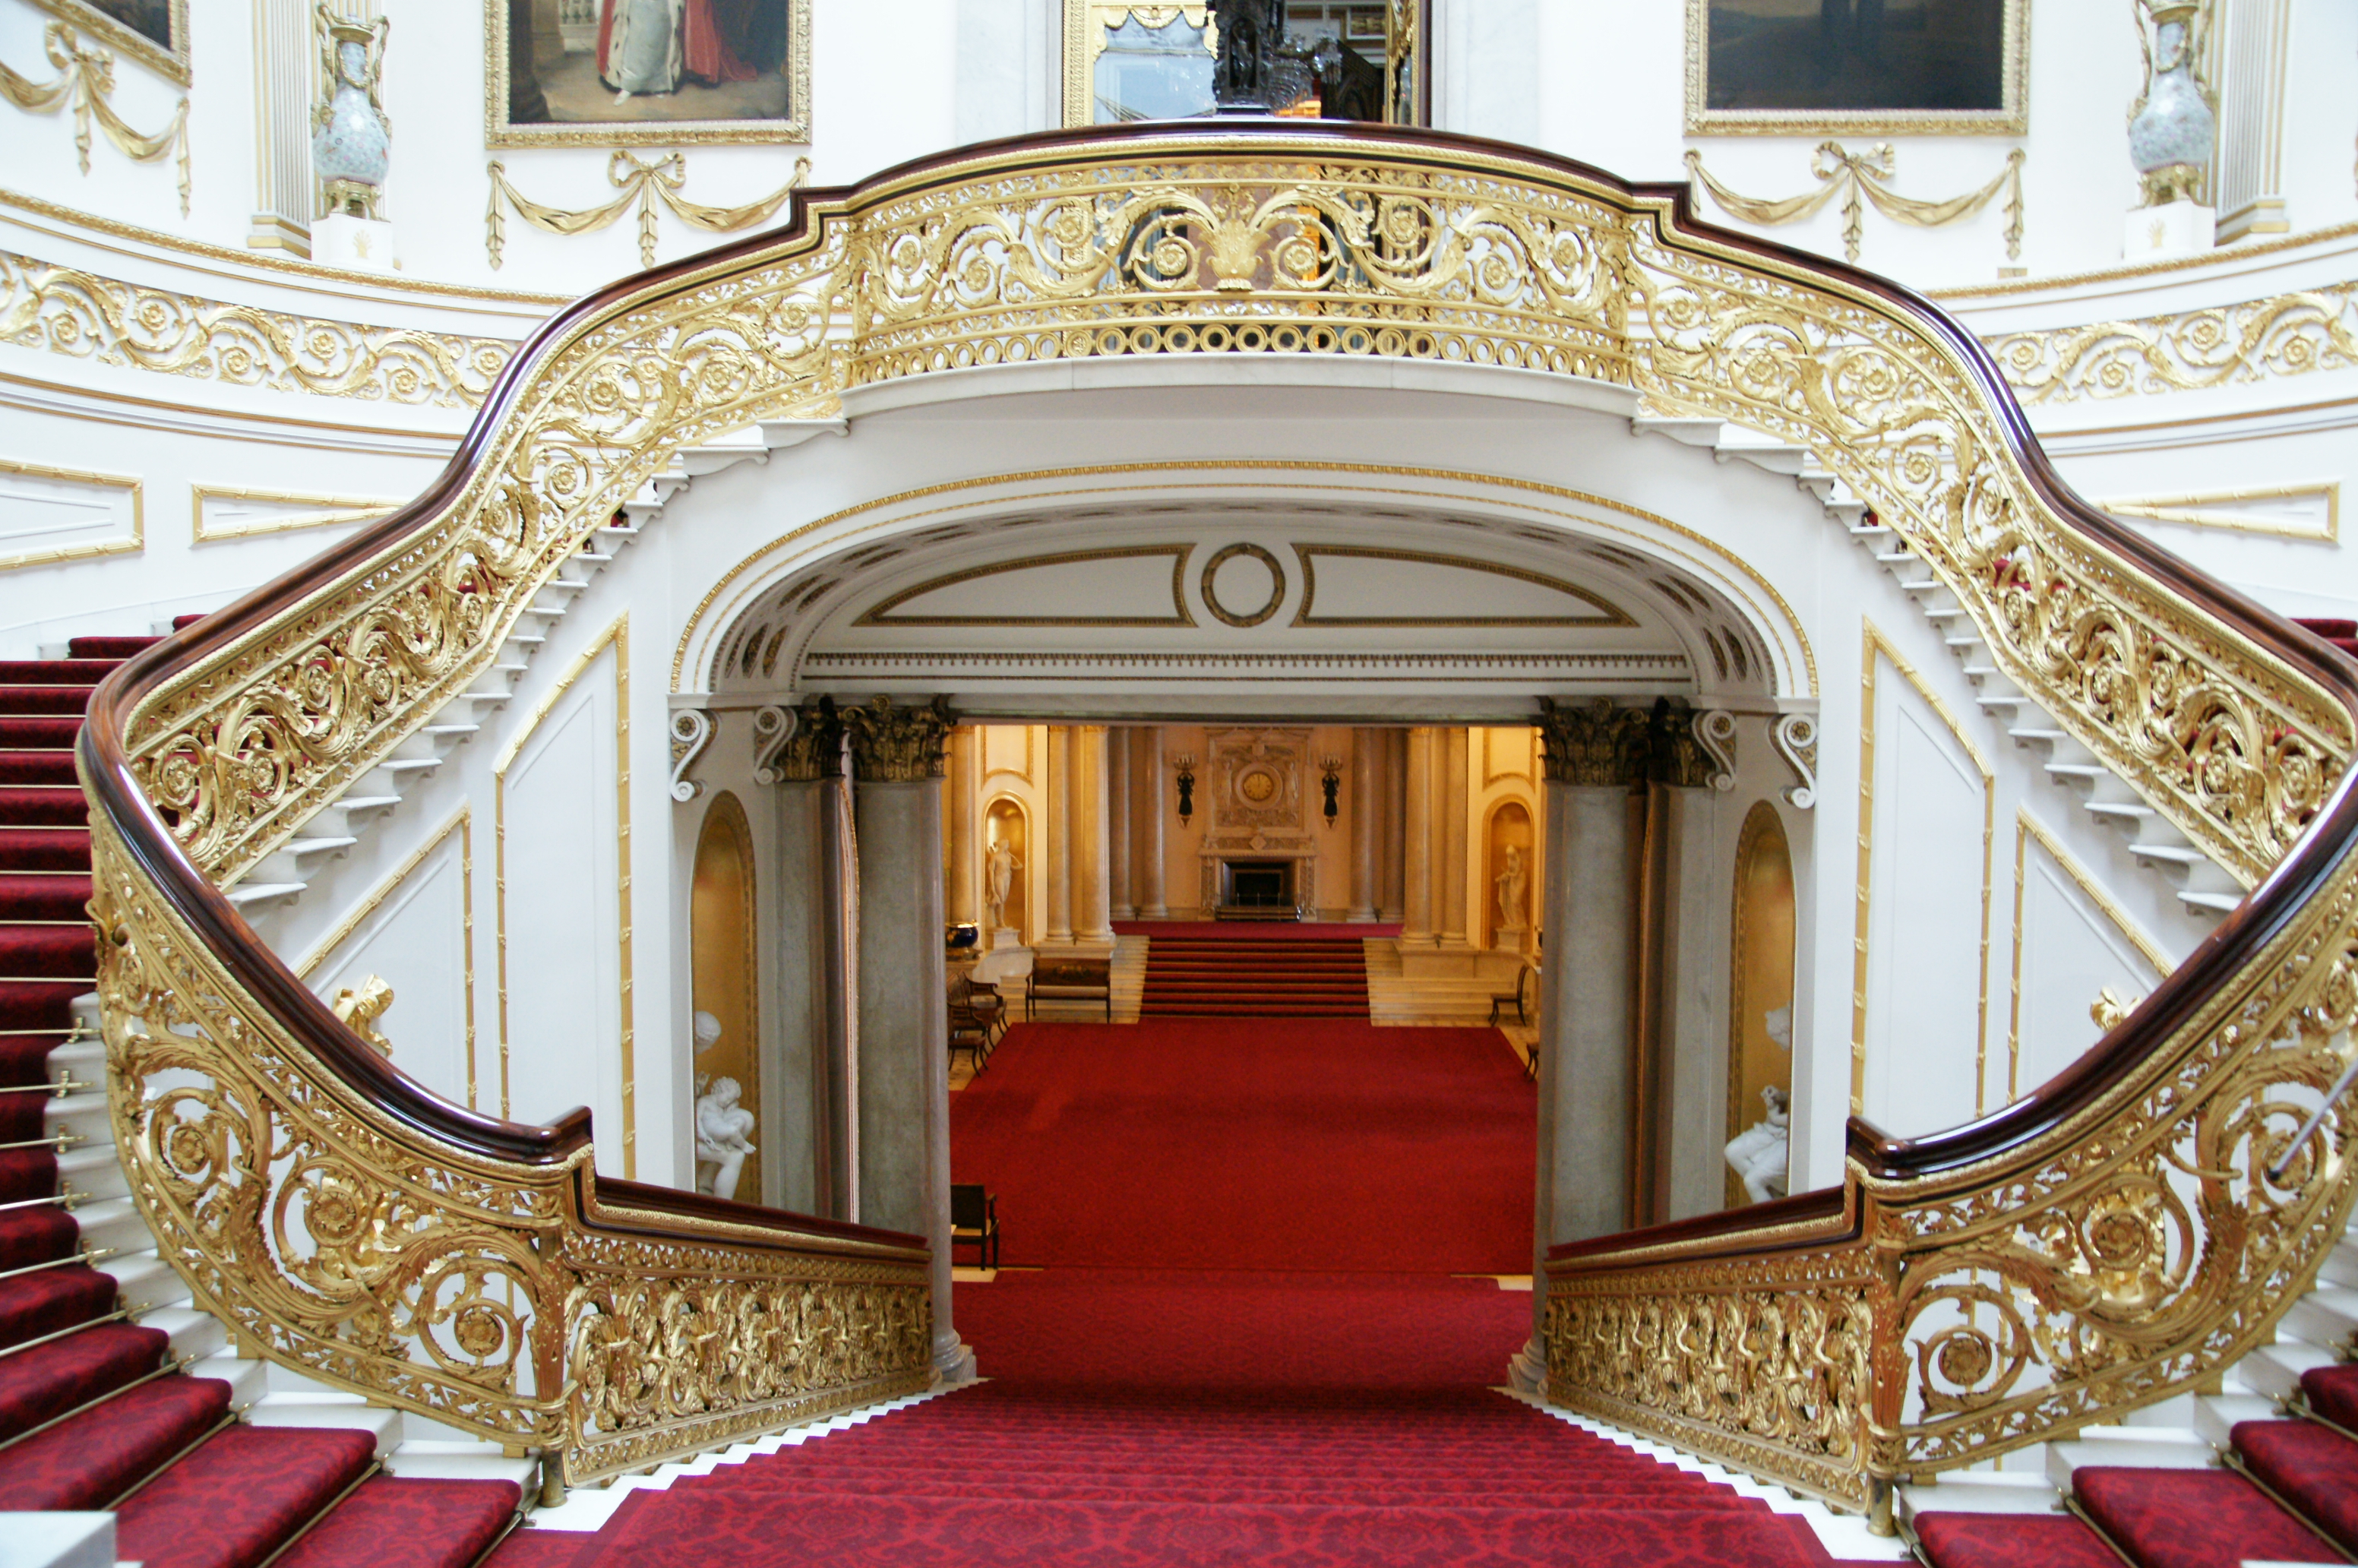 Королевское госп. Парадная лестница Букингемского дворца. Букингемский дворец лестница. Букимдемский Доворец порадная лестница. Королевская Grand Staircase.